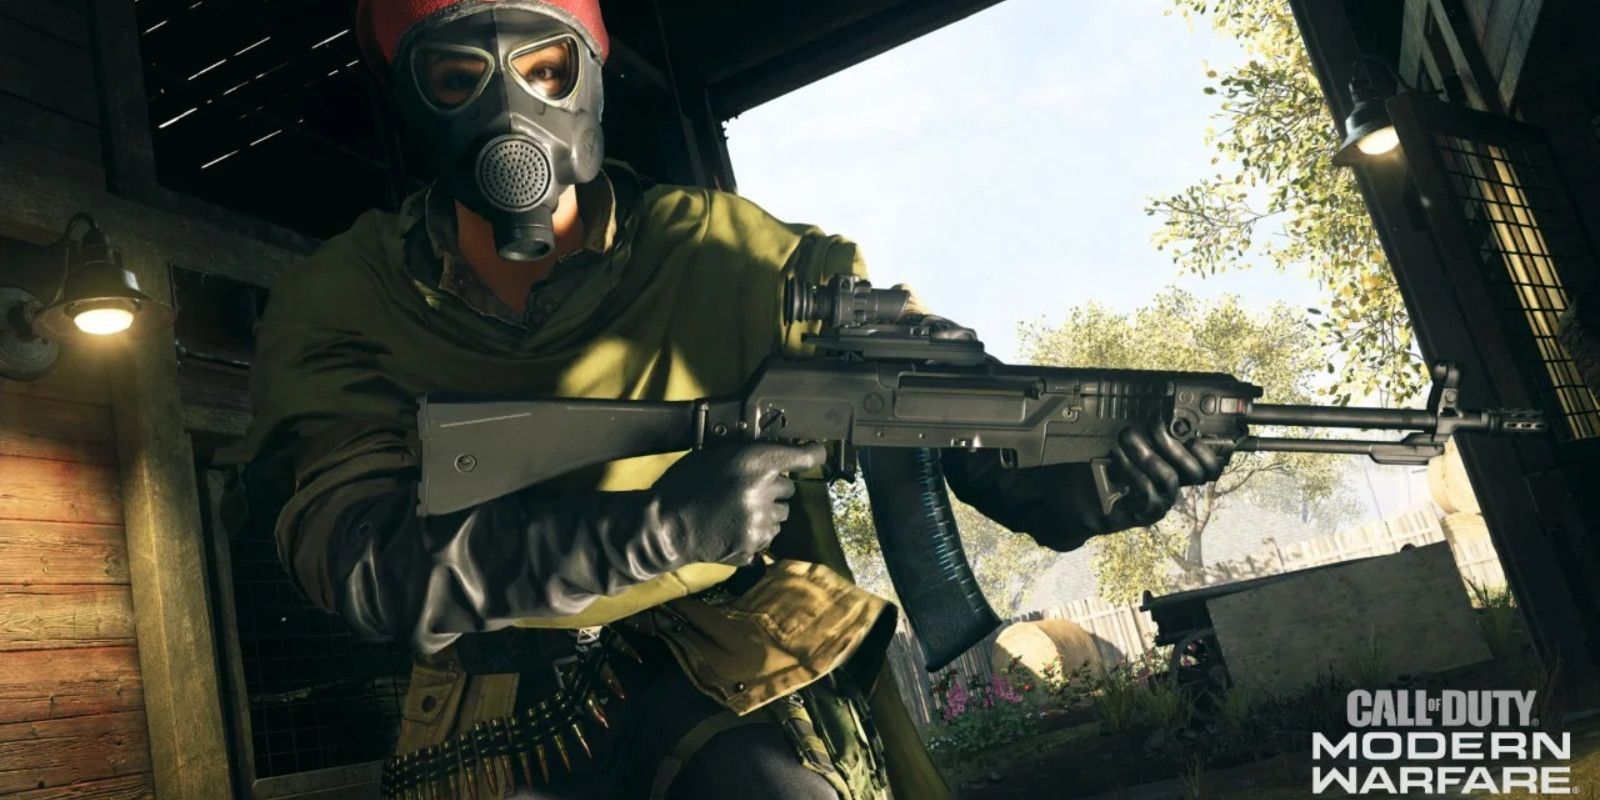 13+ New Call Of Duty Skins Season 5 Pics